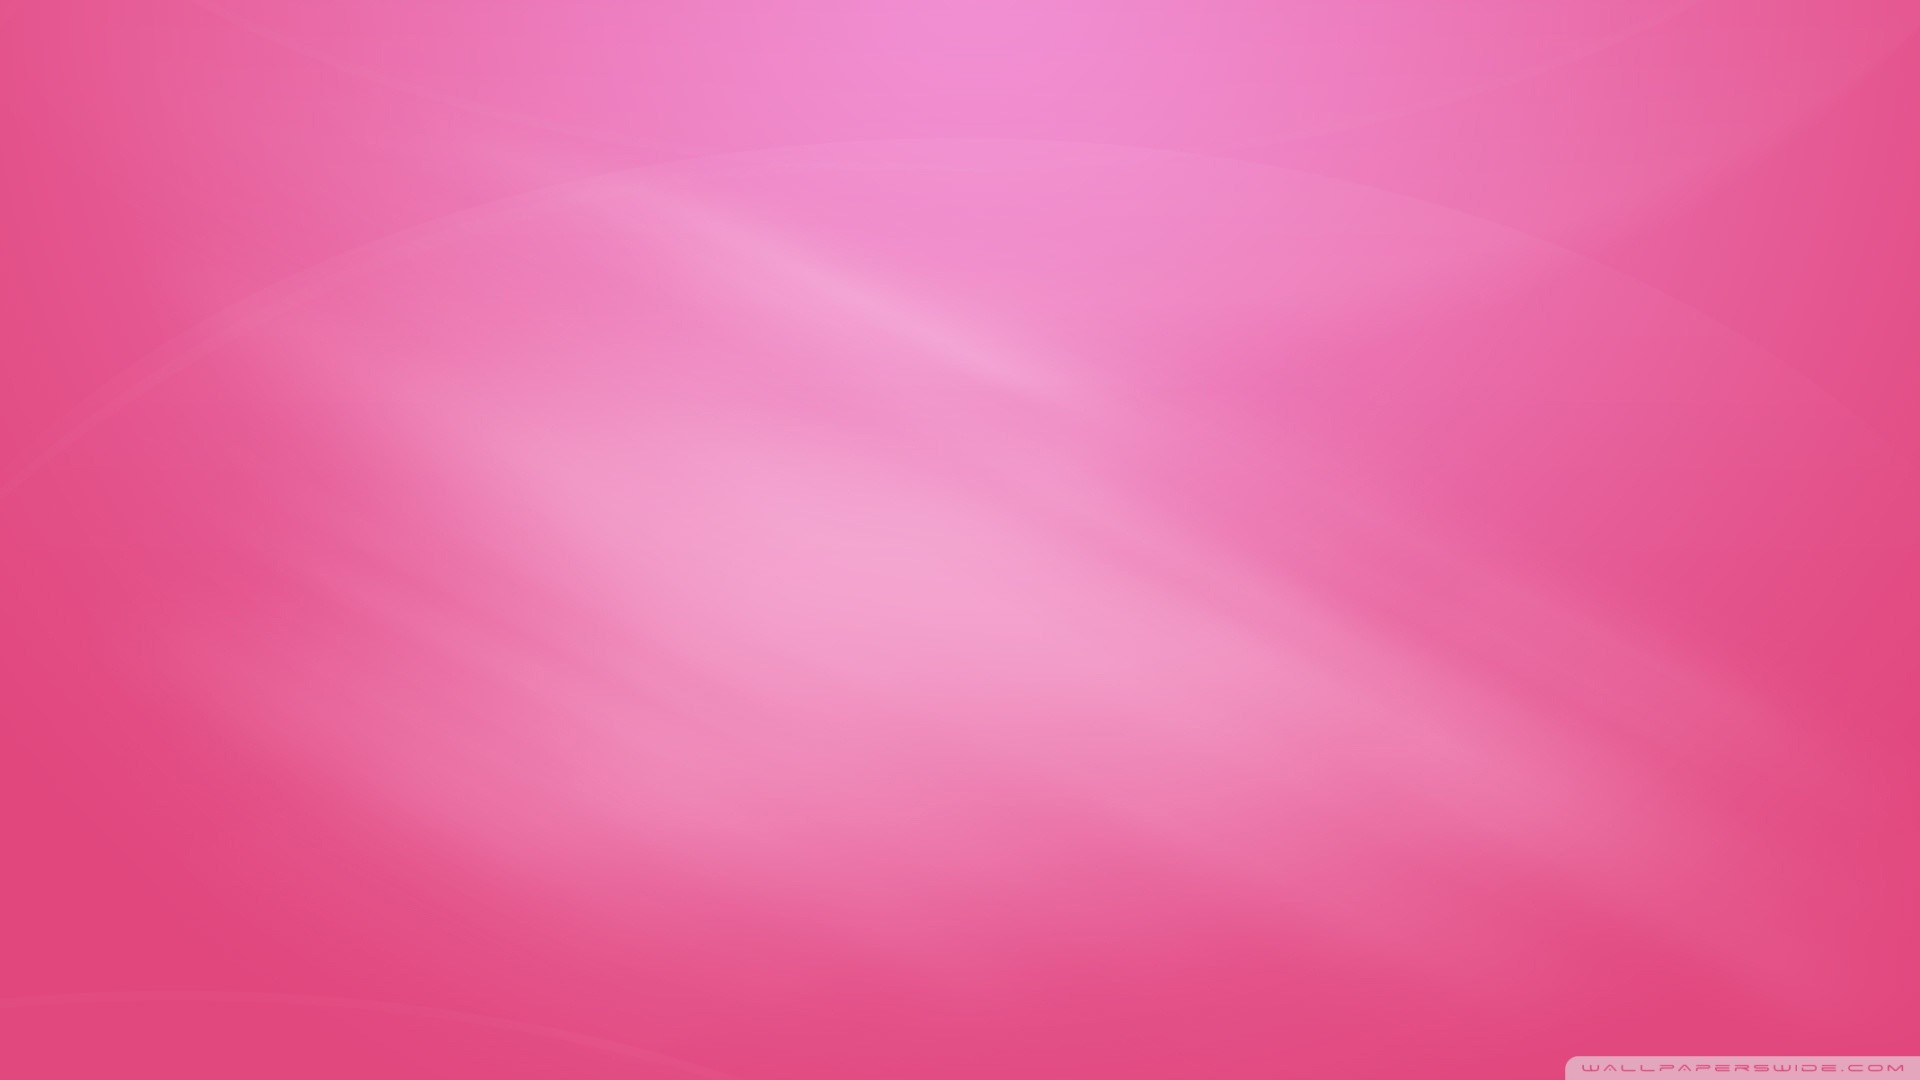 Cute Pink Wallpaper HD Download Free 5.